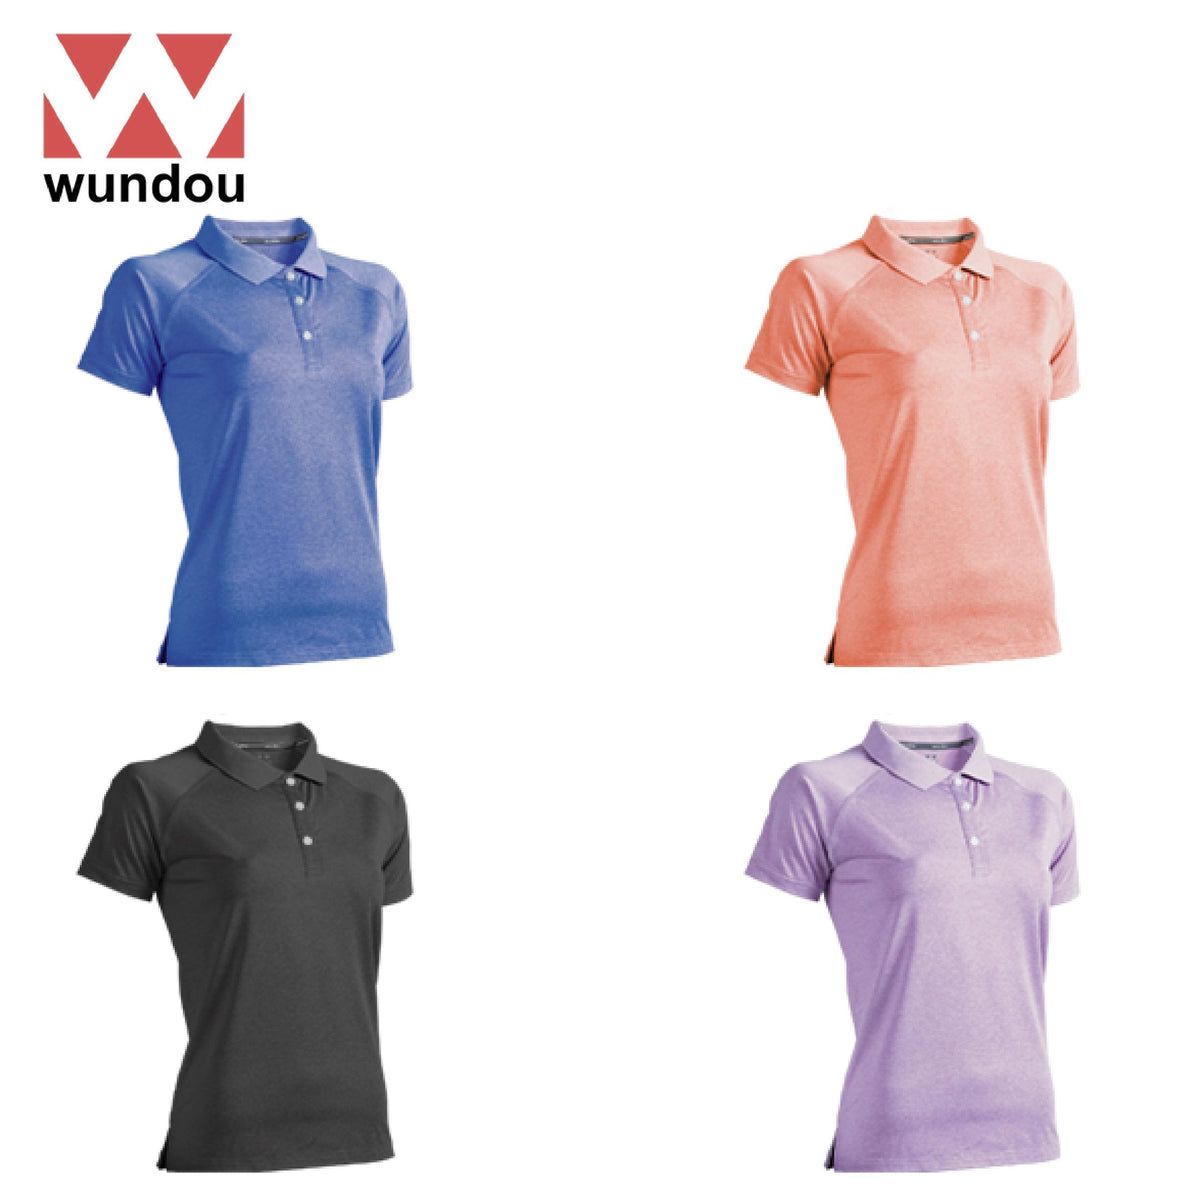 Wundou P825 Women's Fitness Stretch Polo Shirt